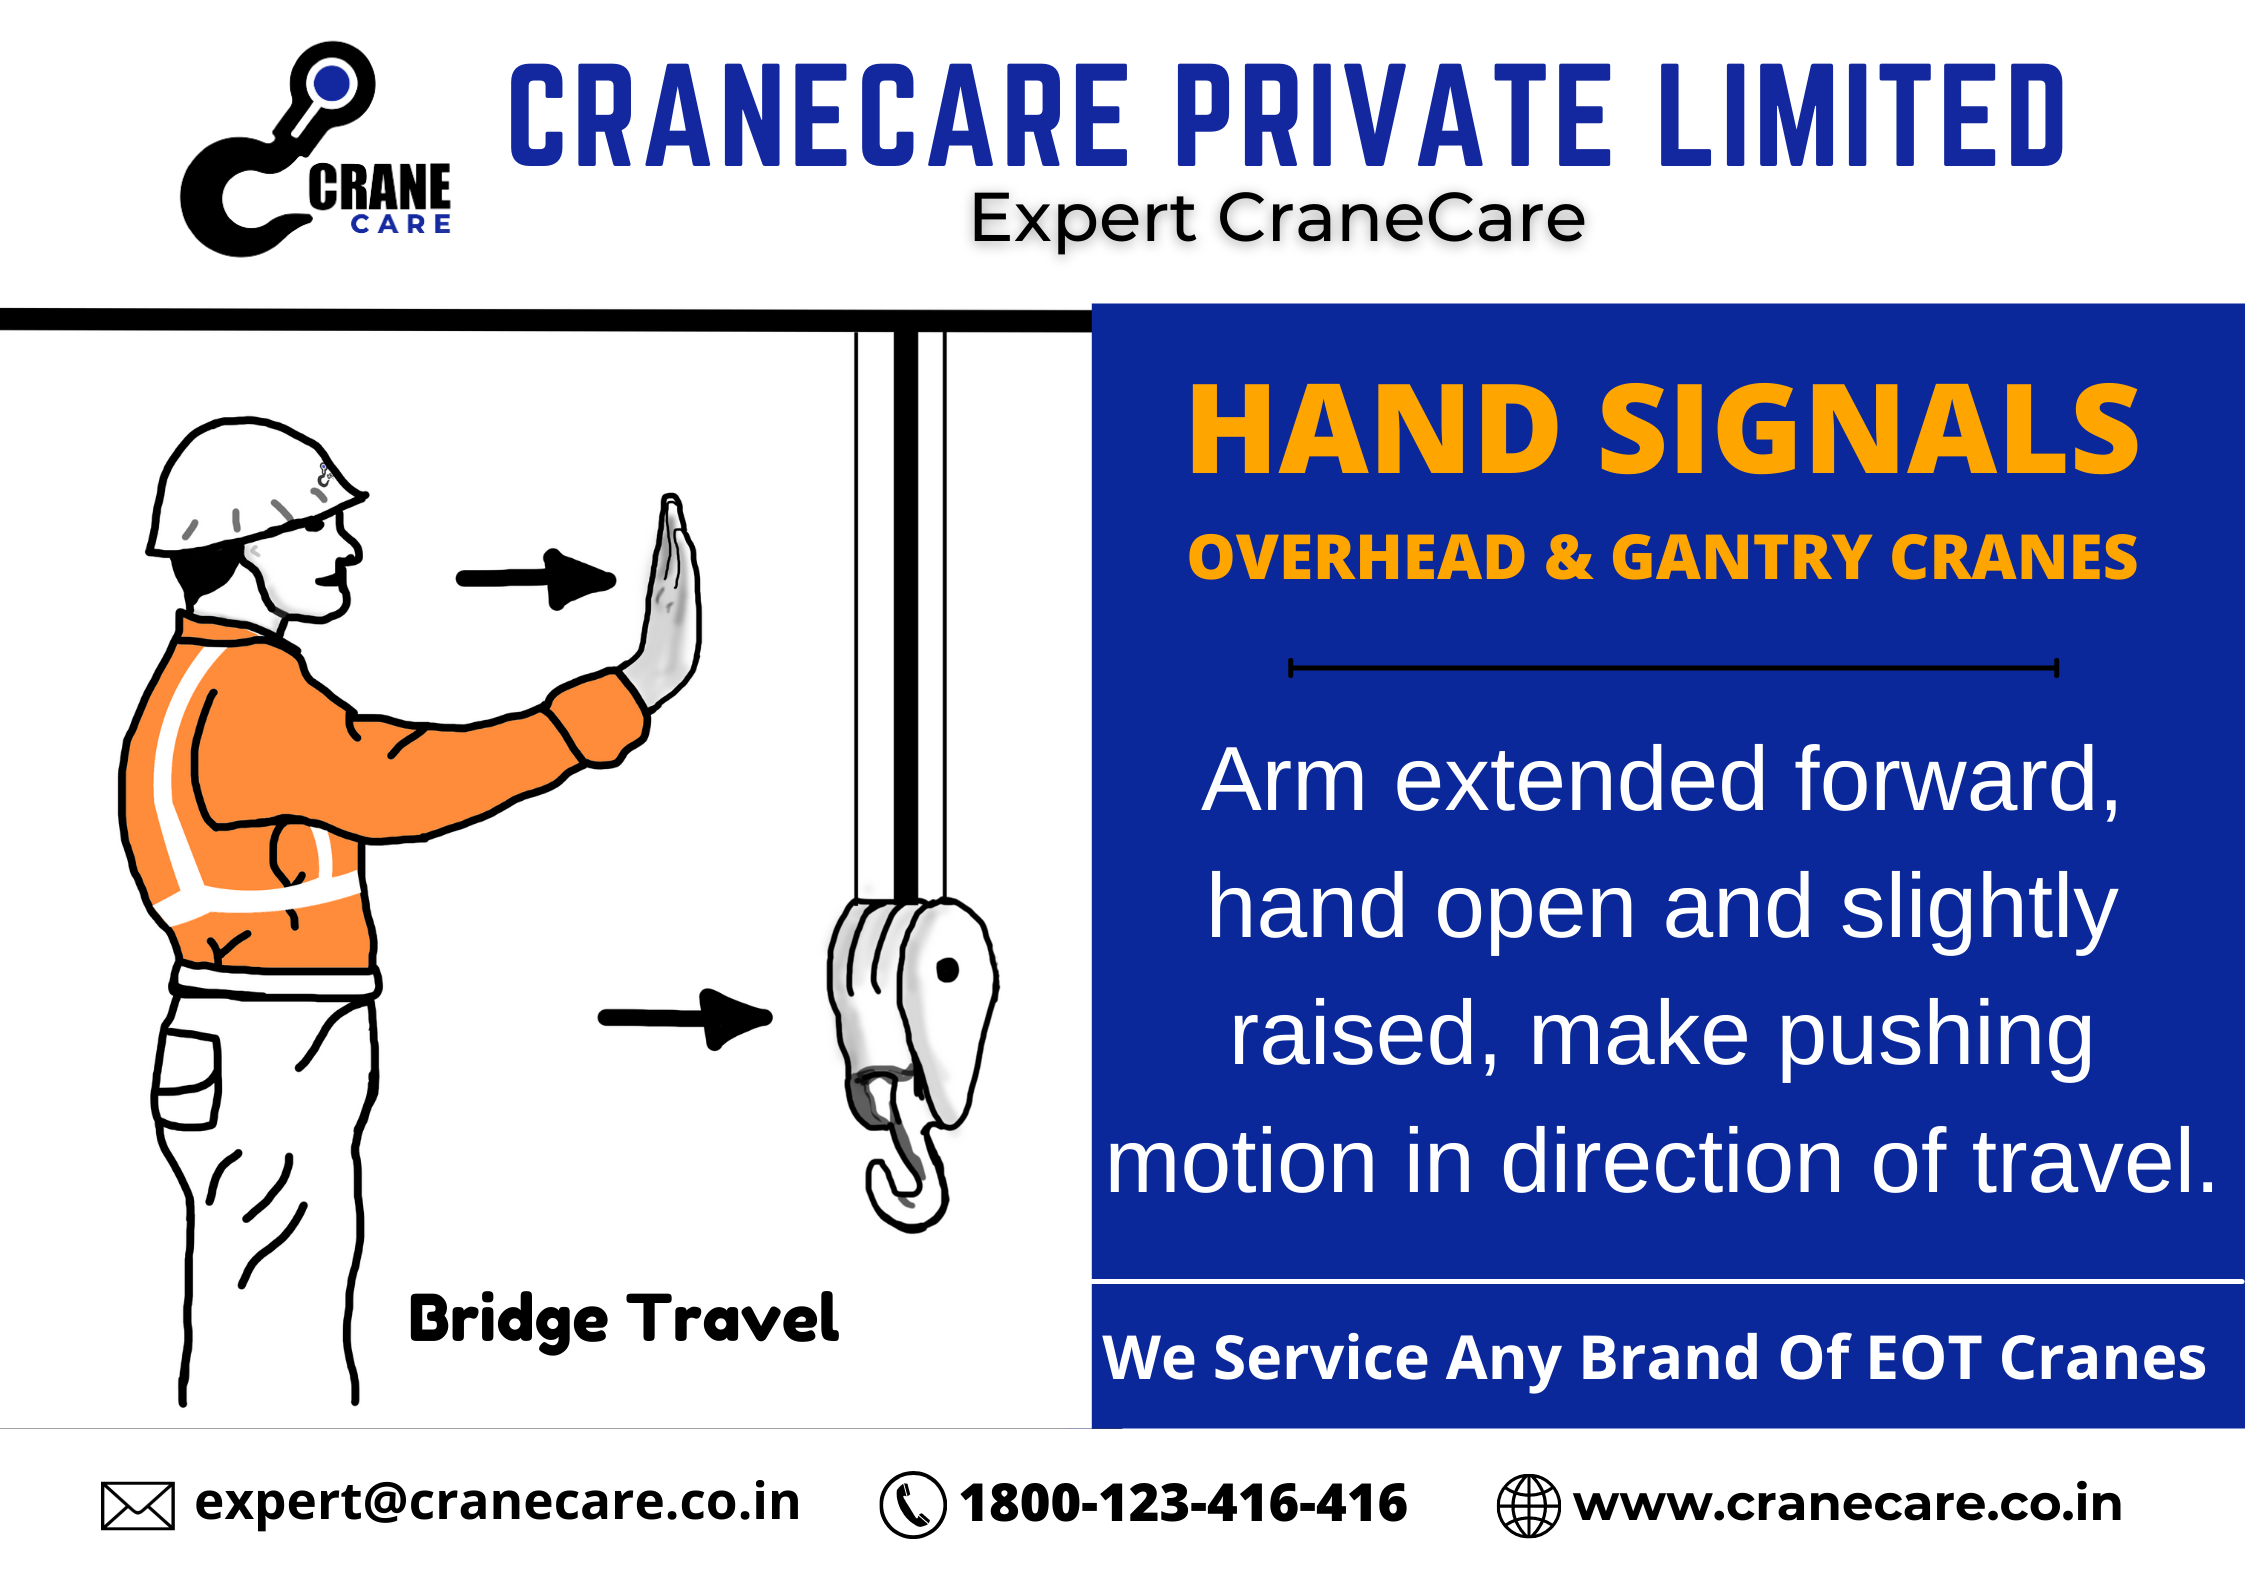 bridge travel : hand signal for EOT cranes